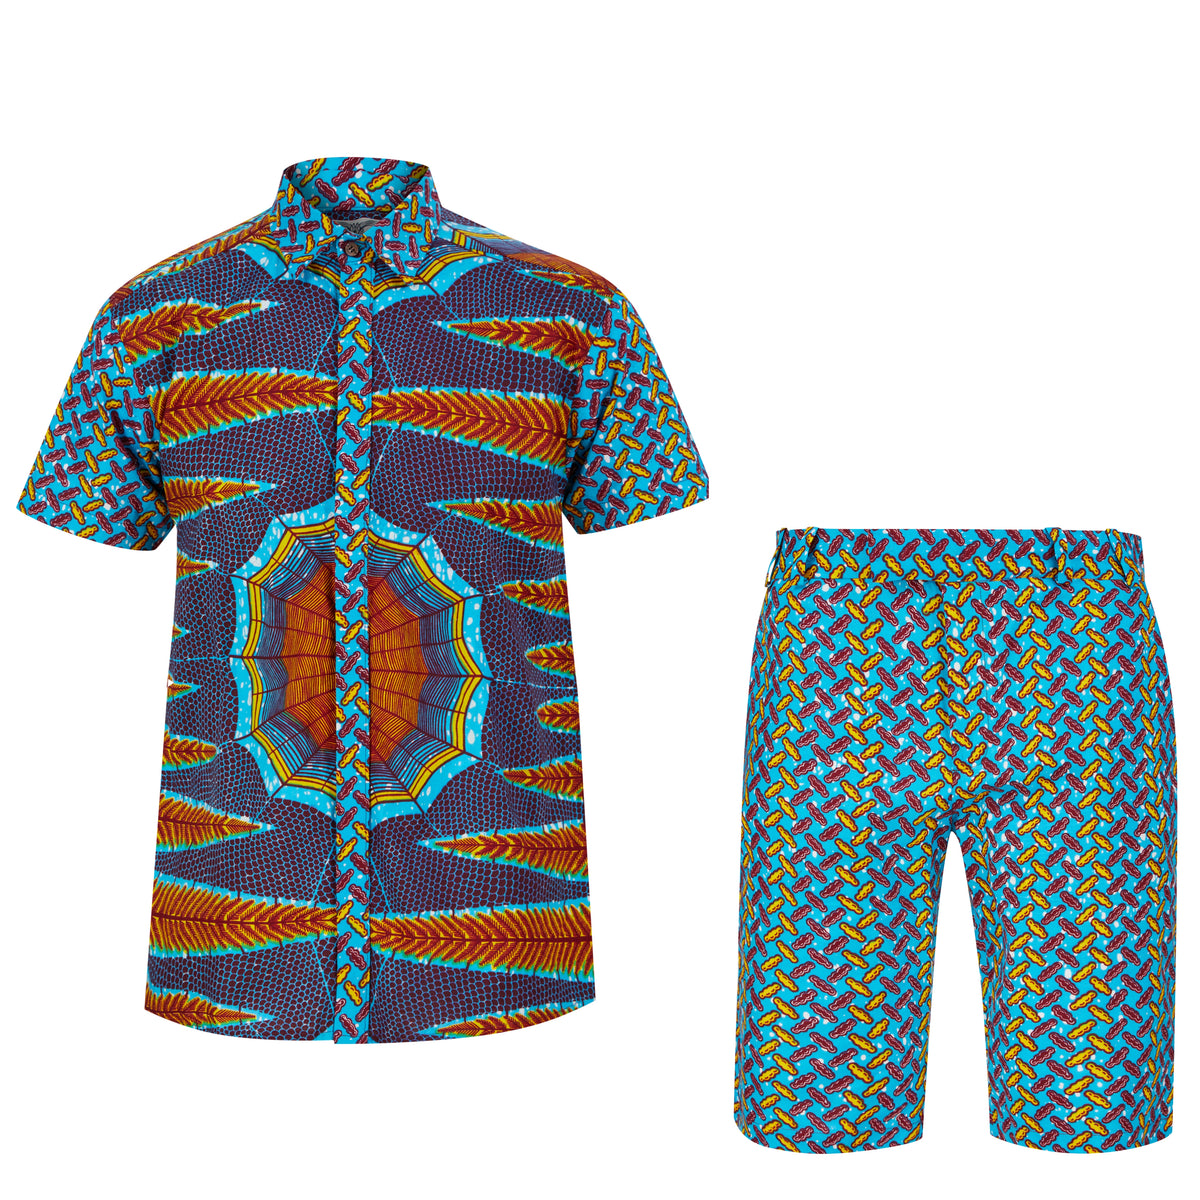 Men's short sleeve mixed print shirt - OHEMA OHENE AFRICAN INSPIRED FASHION